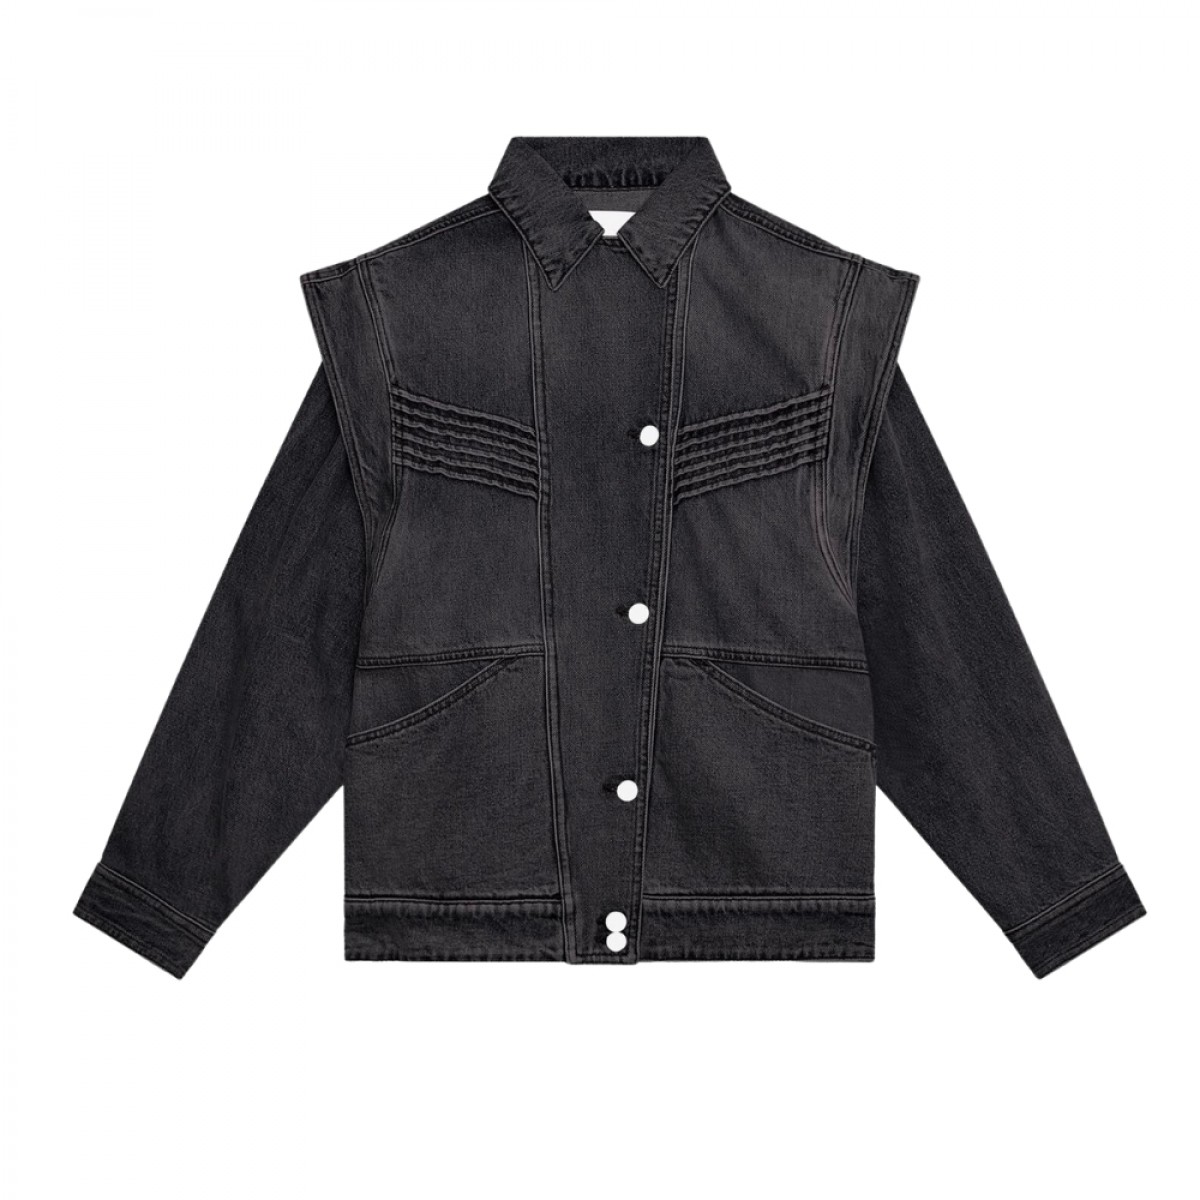 harmon jacket - faded black - front